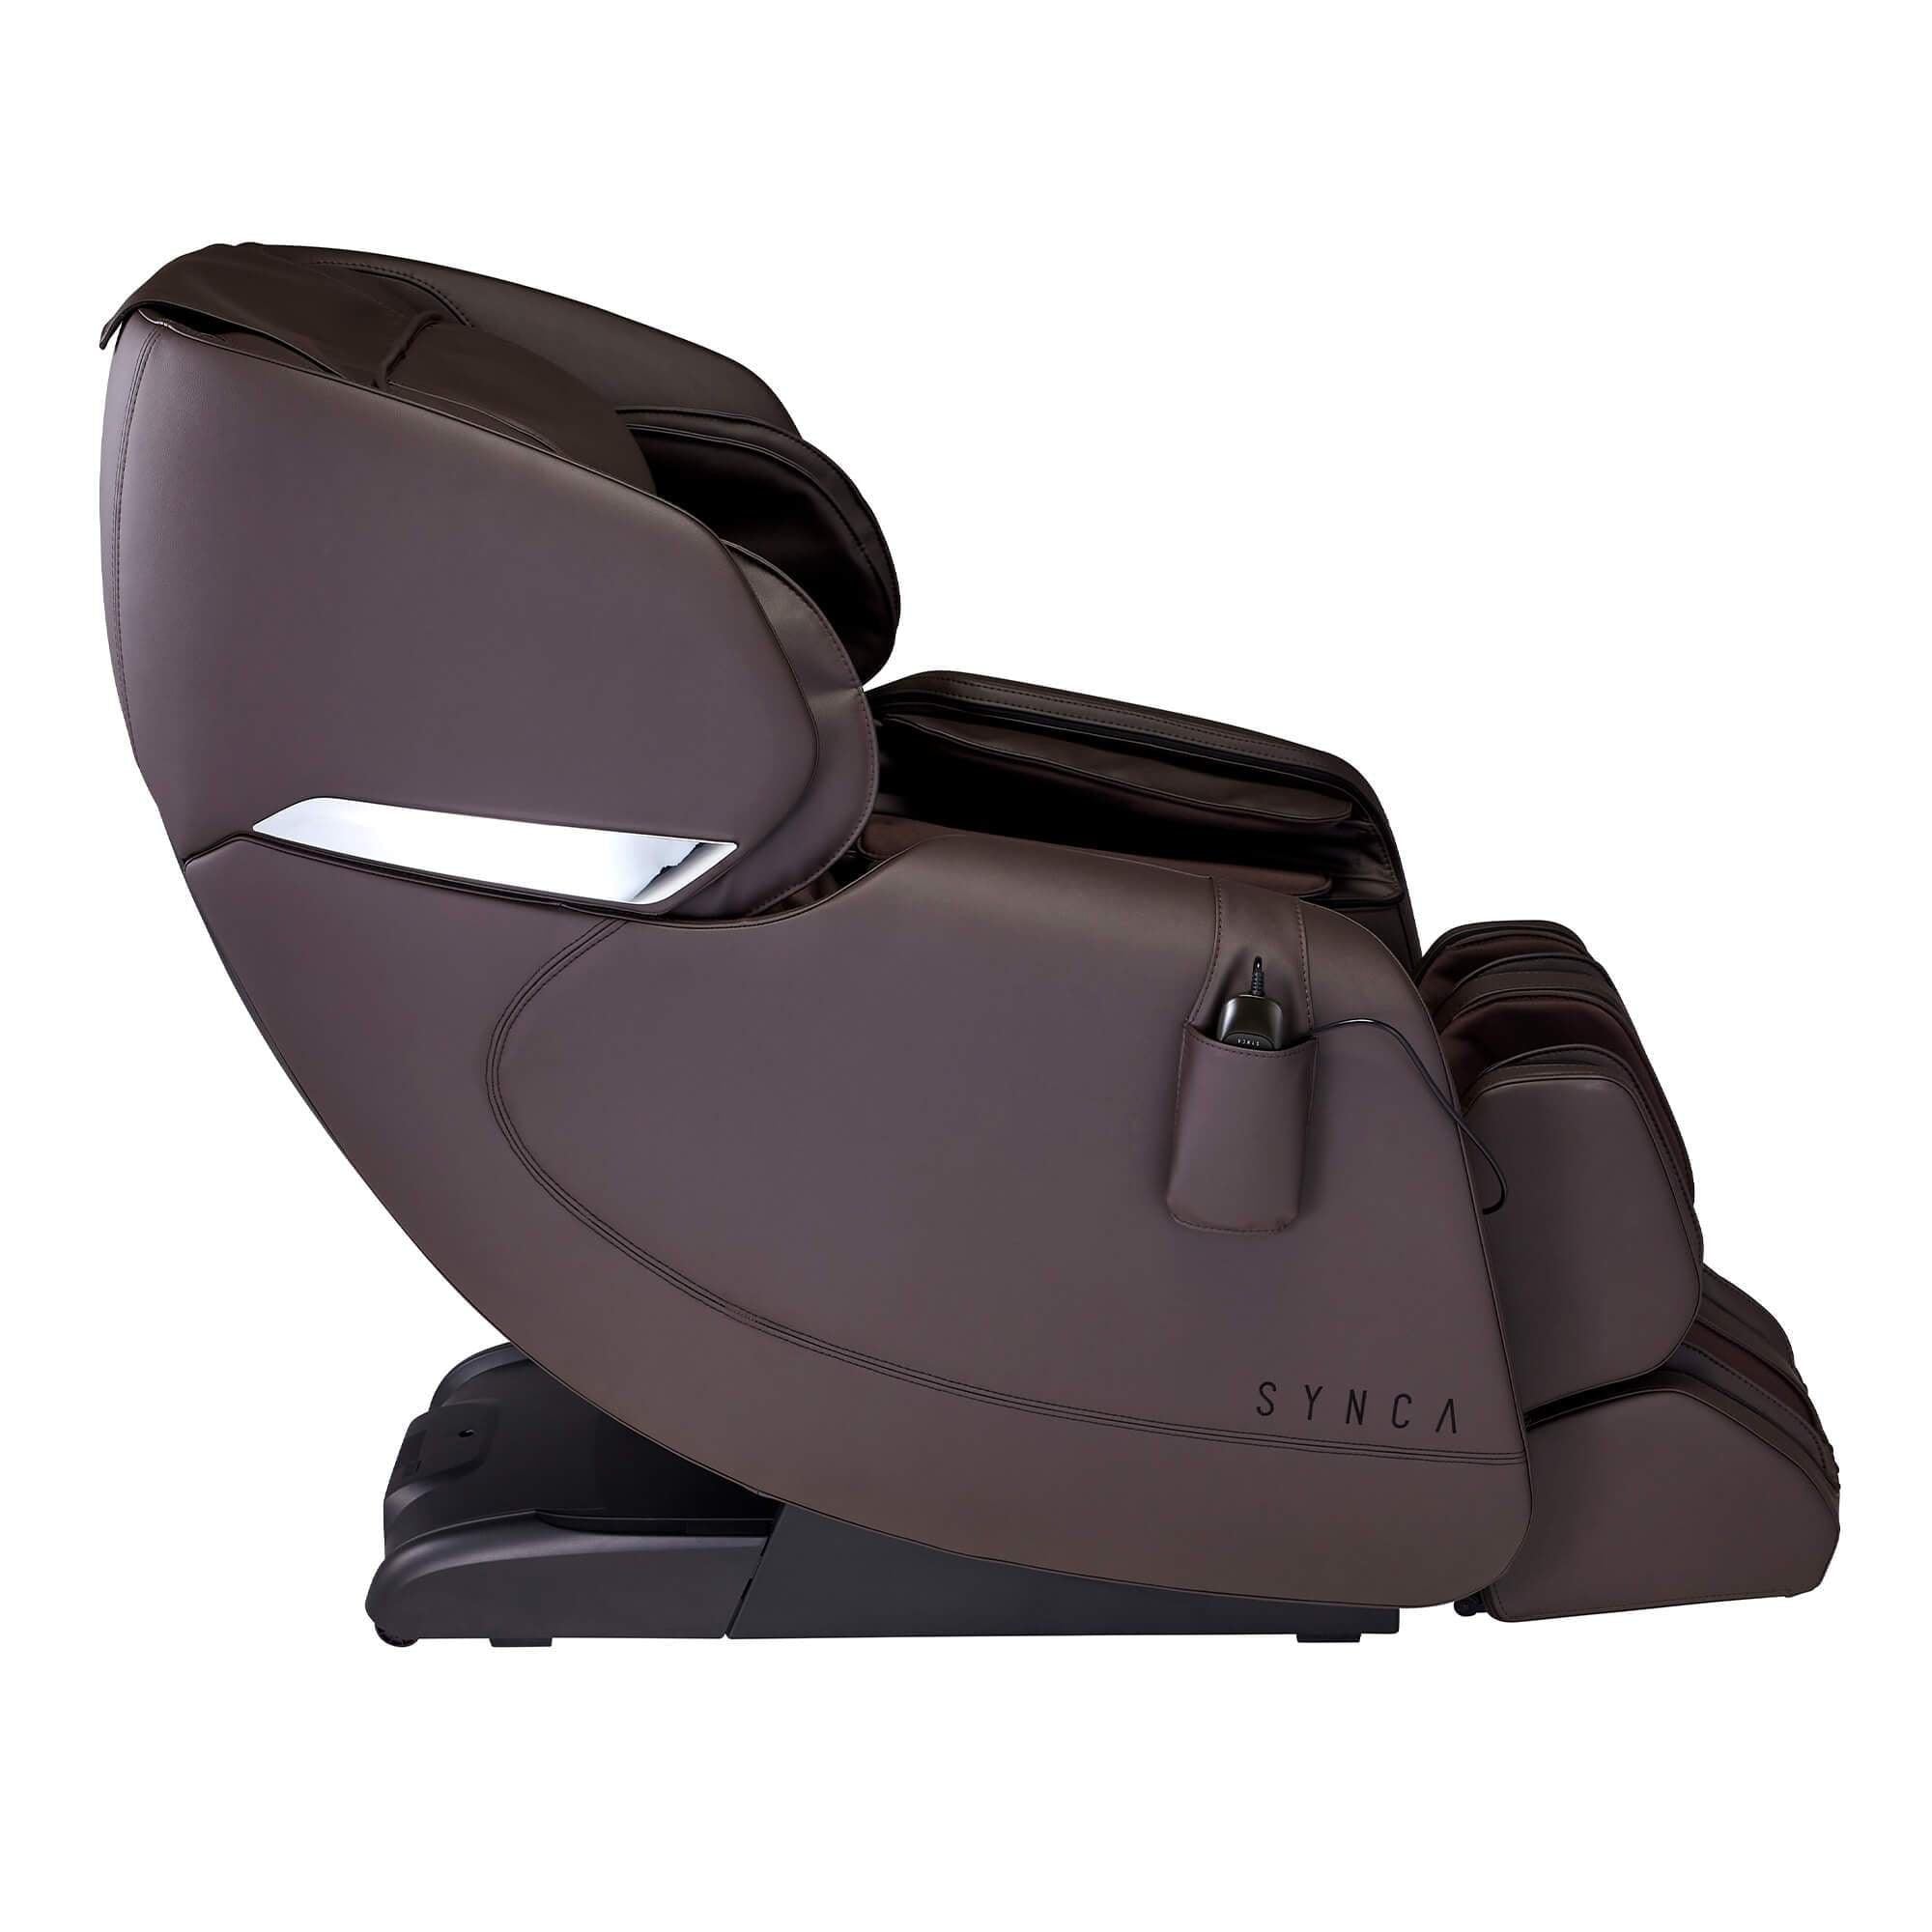 Synca Hisho SL Track Heated Deluxe Zero Gravity Massage Chair